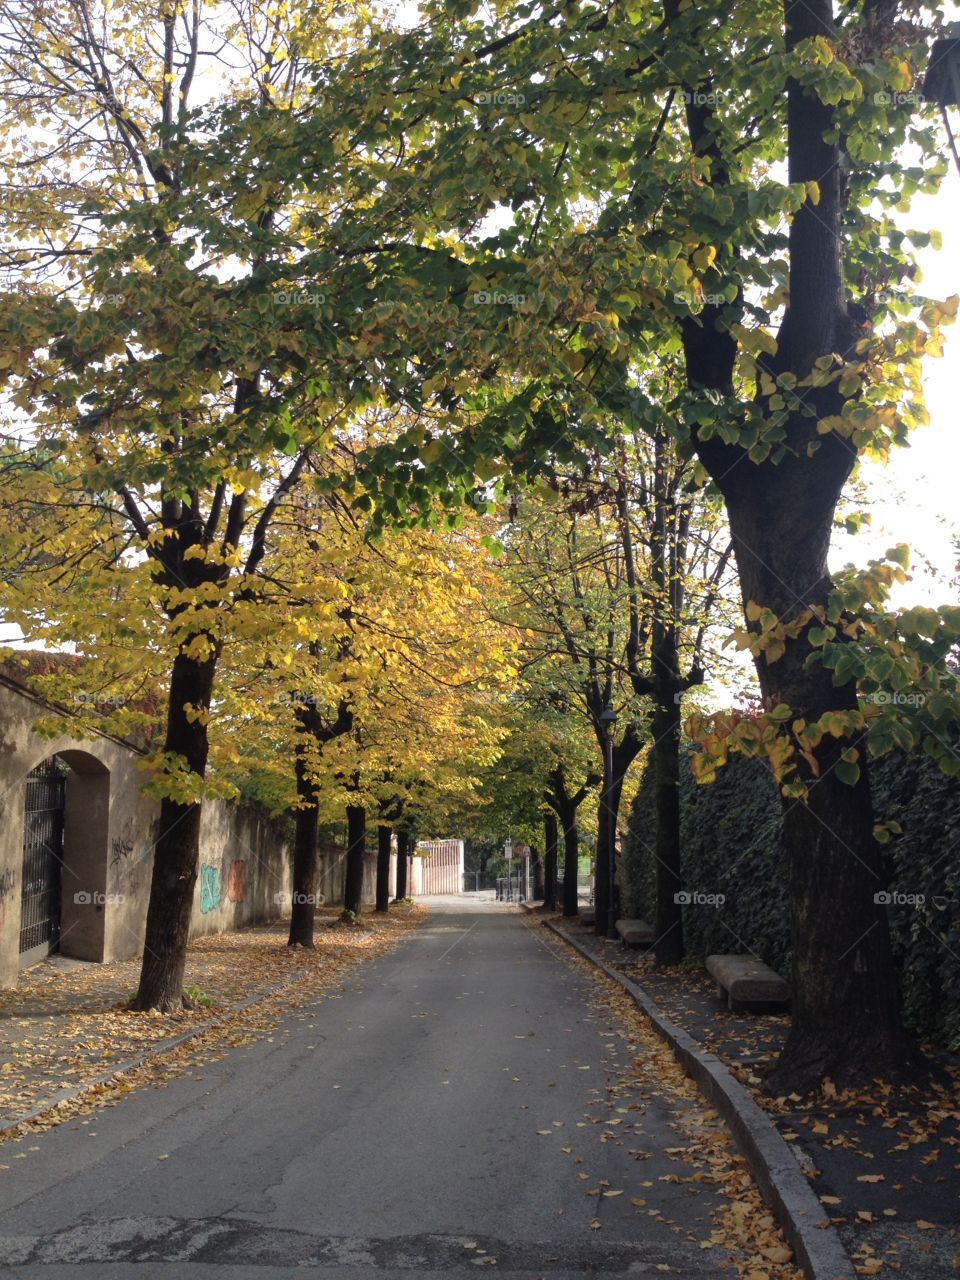 Tree-lined street

